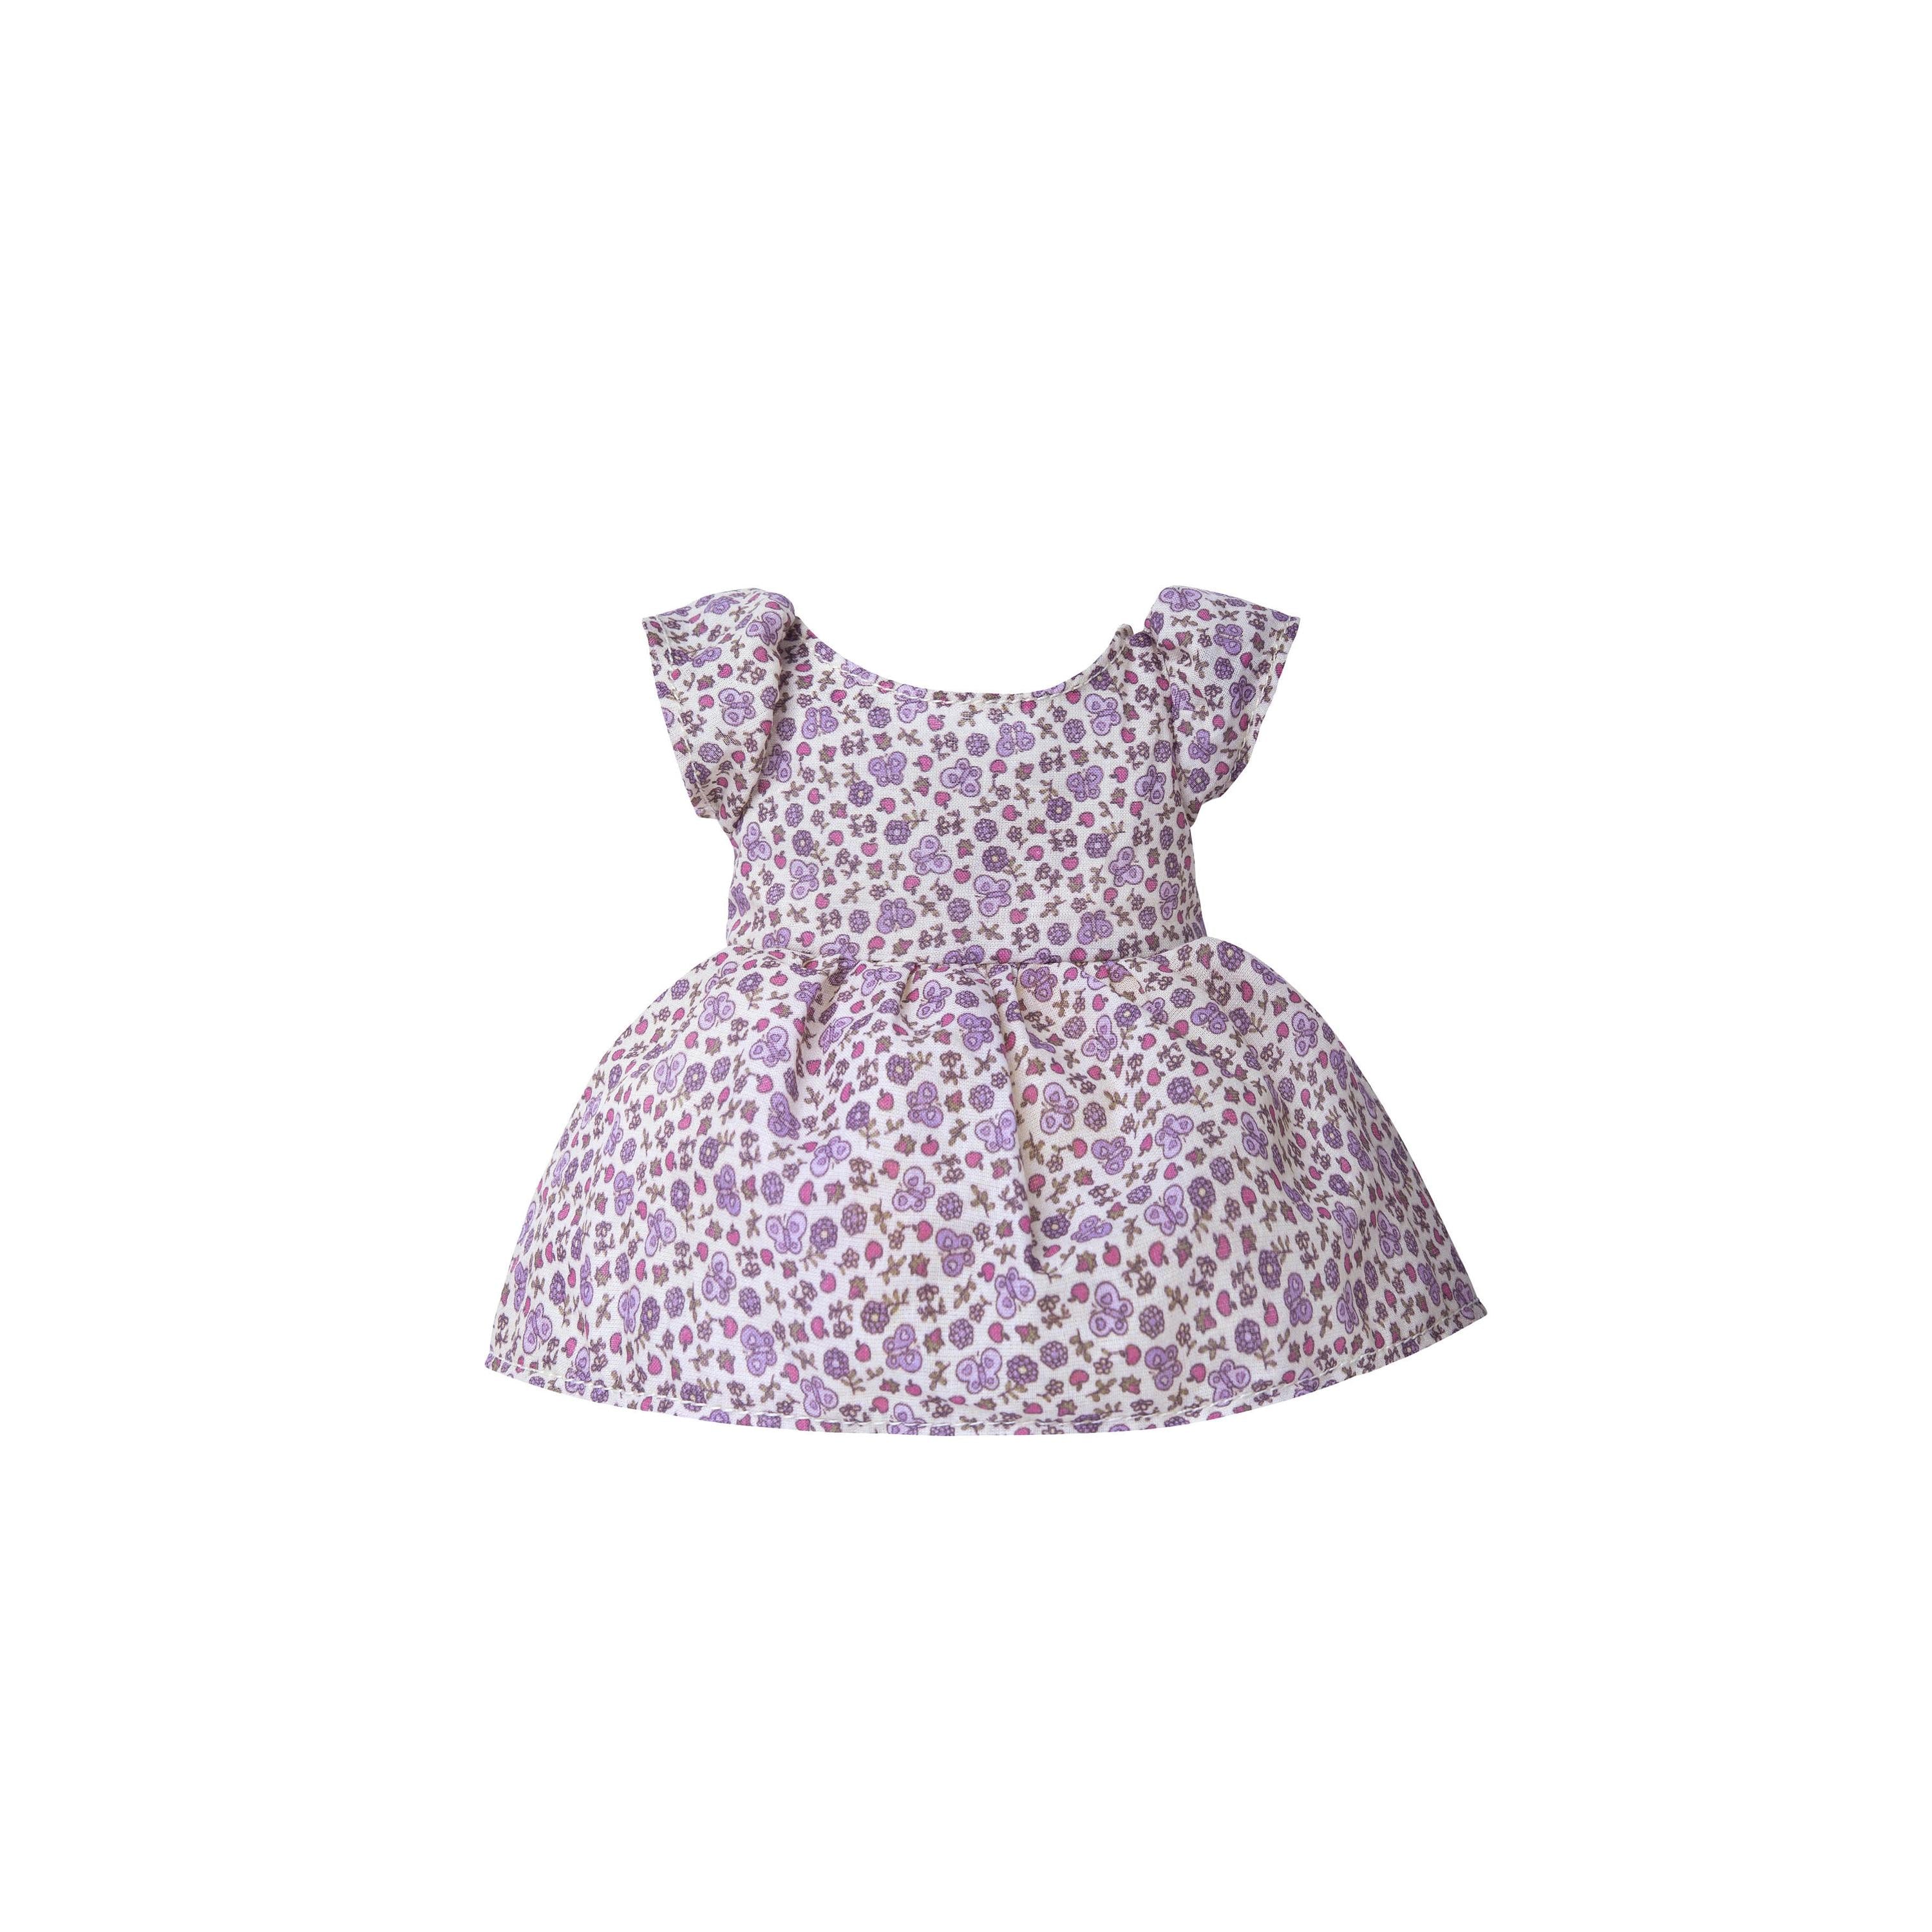 Apple Park Kids - Mia in Purple Floral Dress